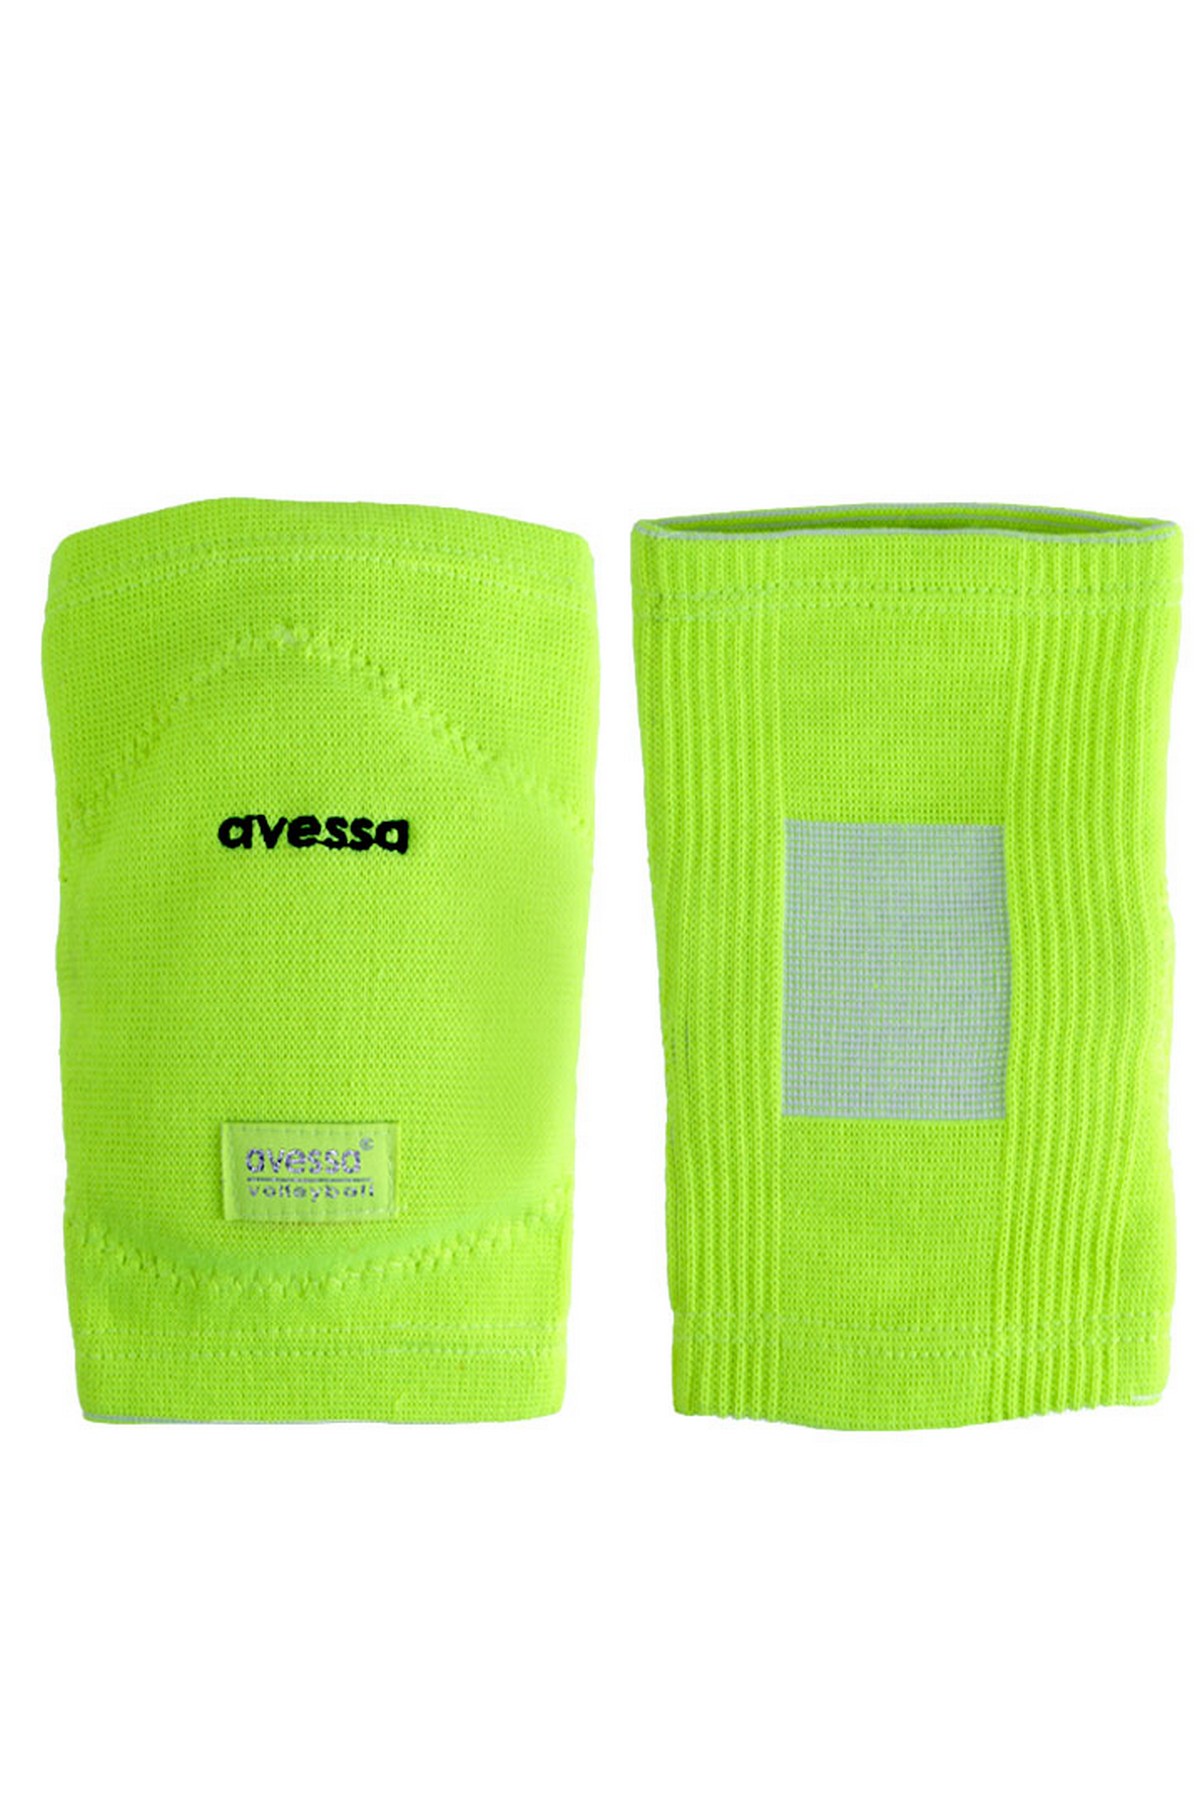 Avessa VD300 - Neon Yeşil Voleybol Dizliği